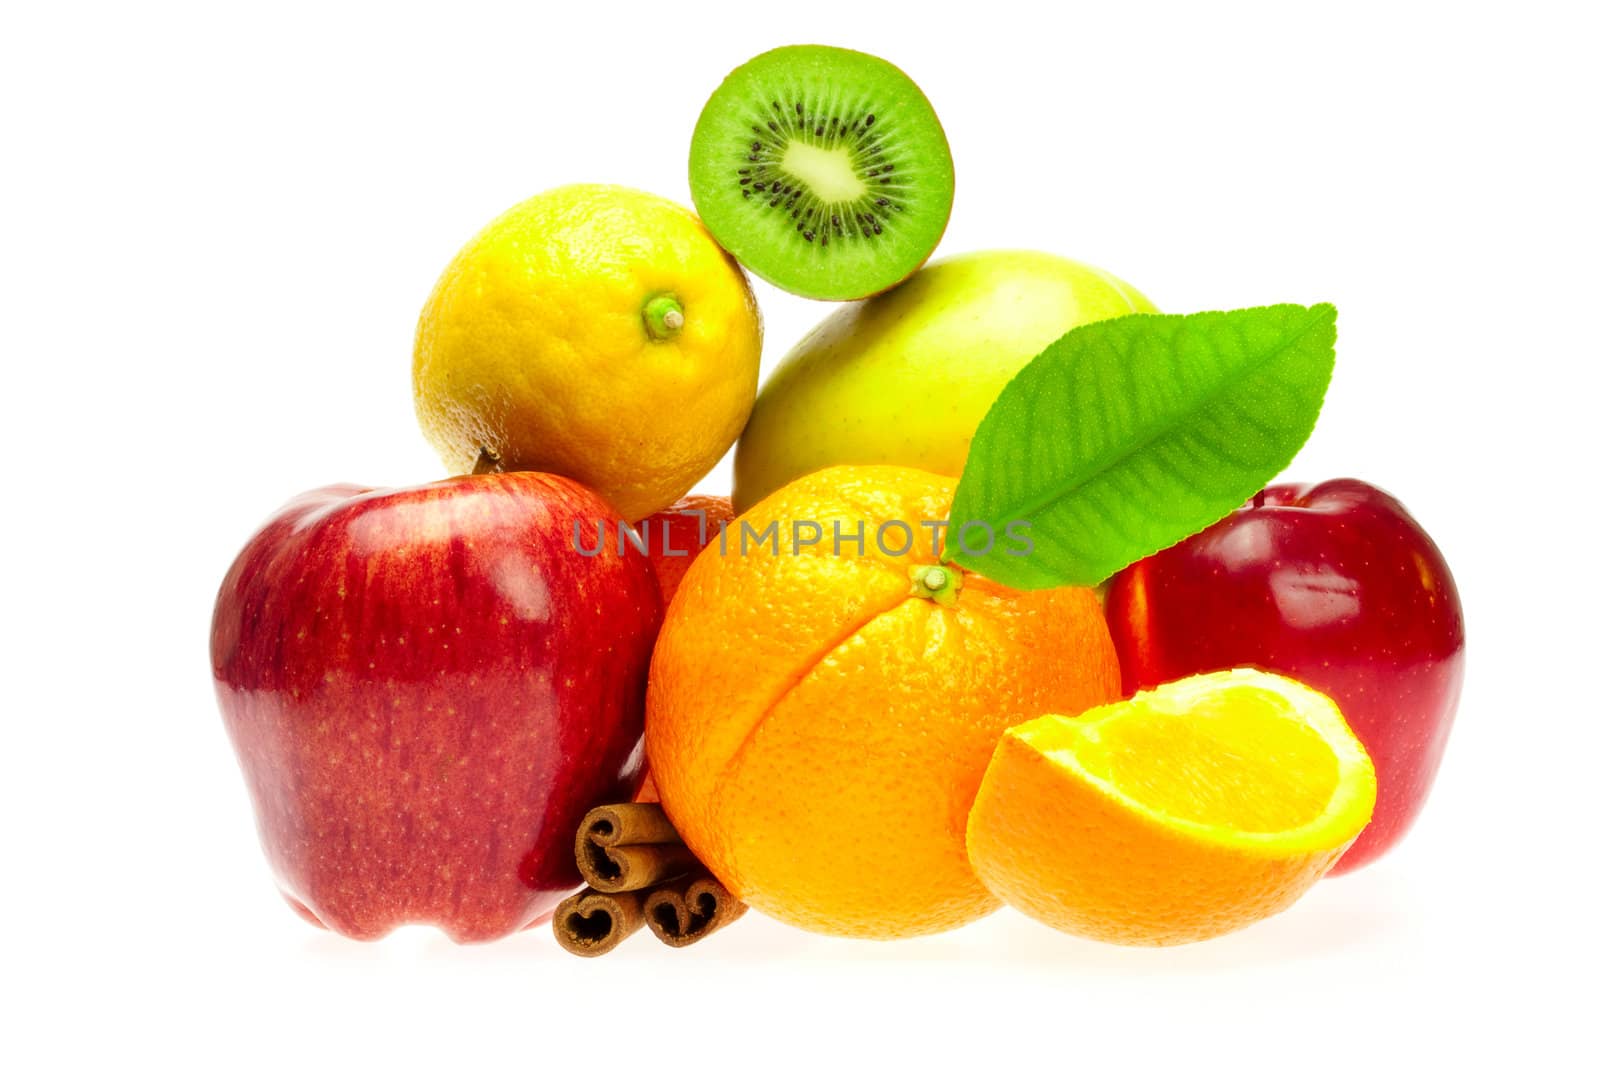 kiwi, avocado, apples, orange, lemon, and cinnamon, isolated on  by jannyjus